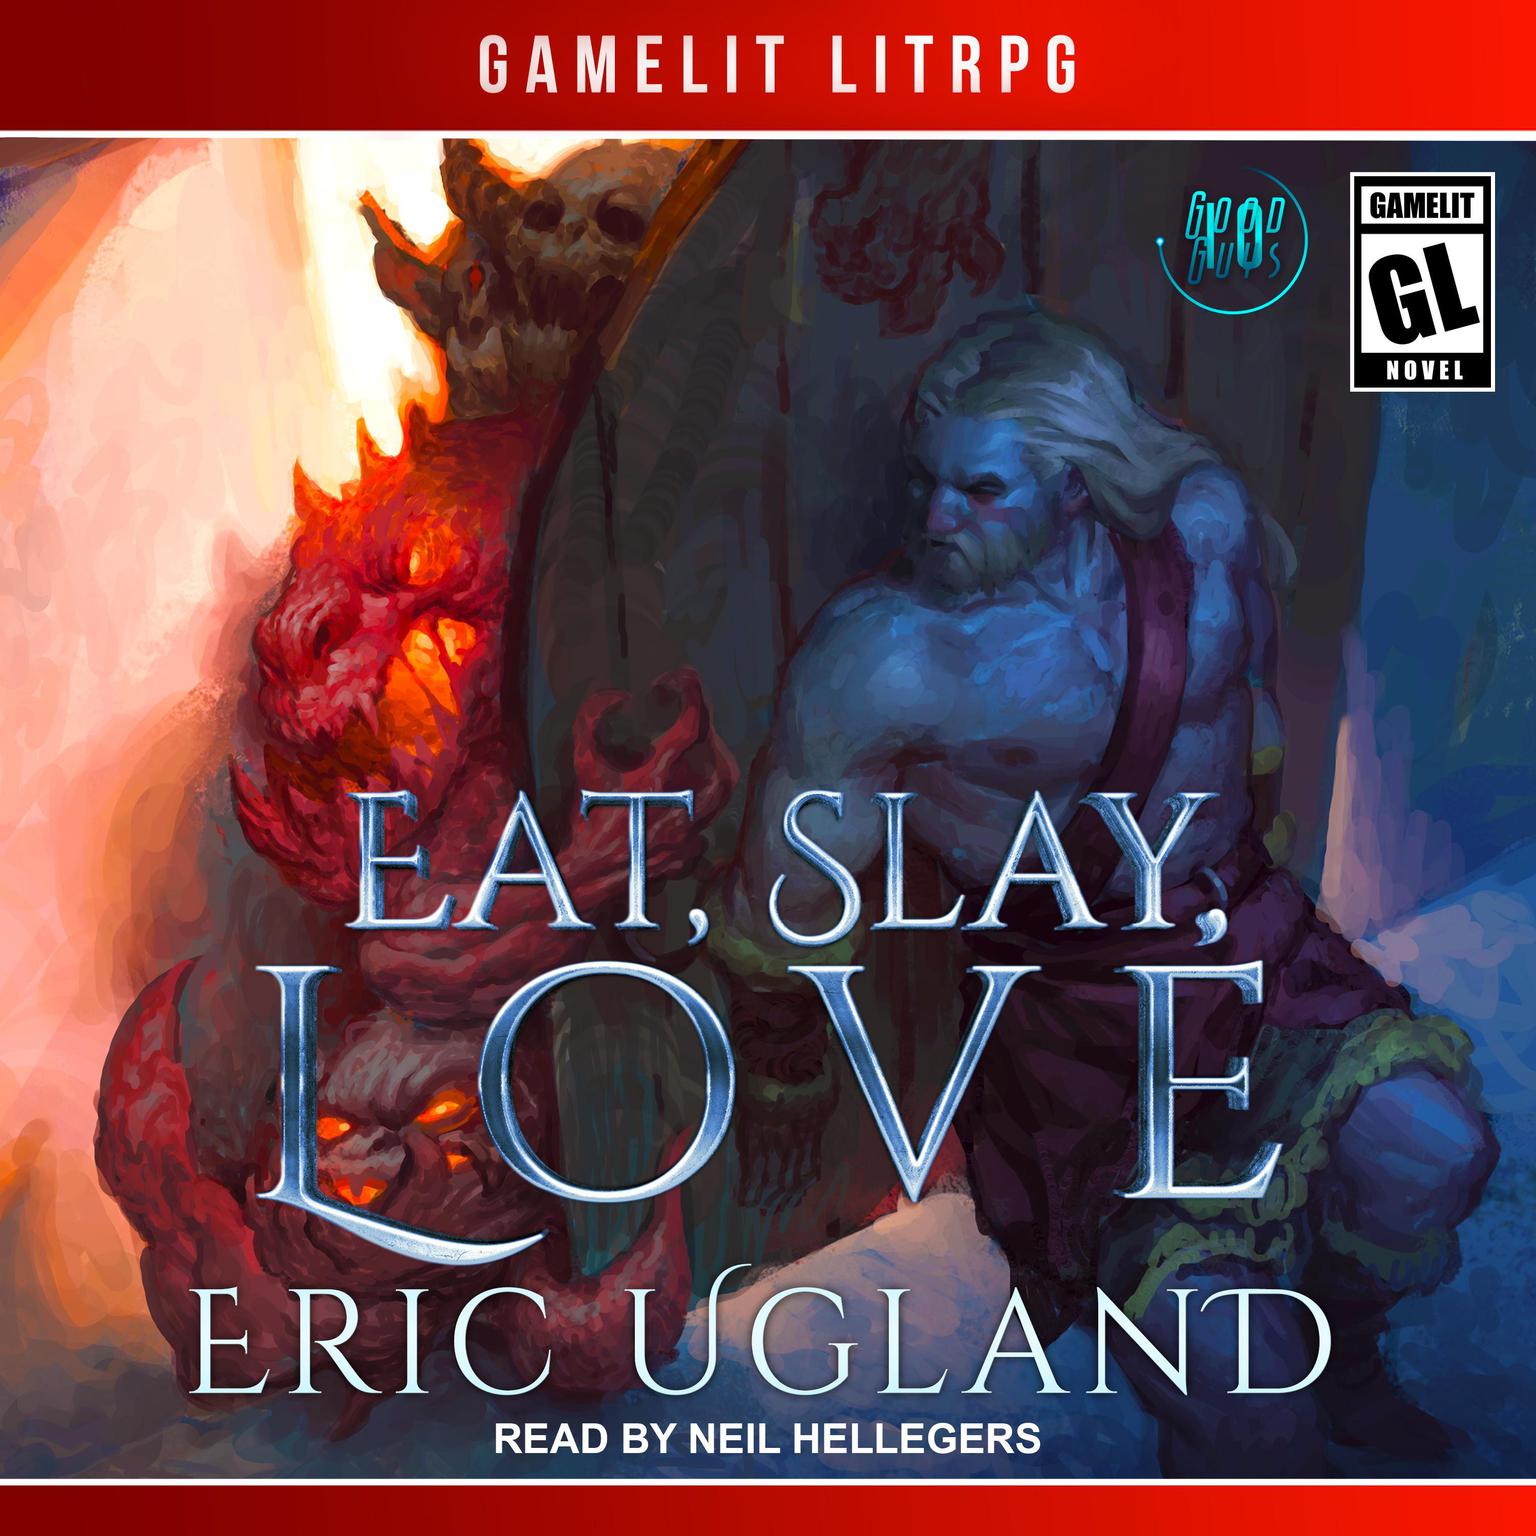 Eat, Slay, Love Audiobook, by Eric Ugland